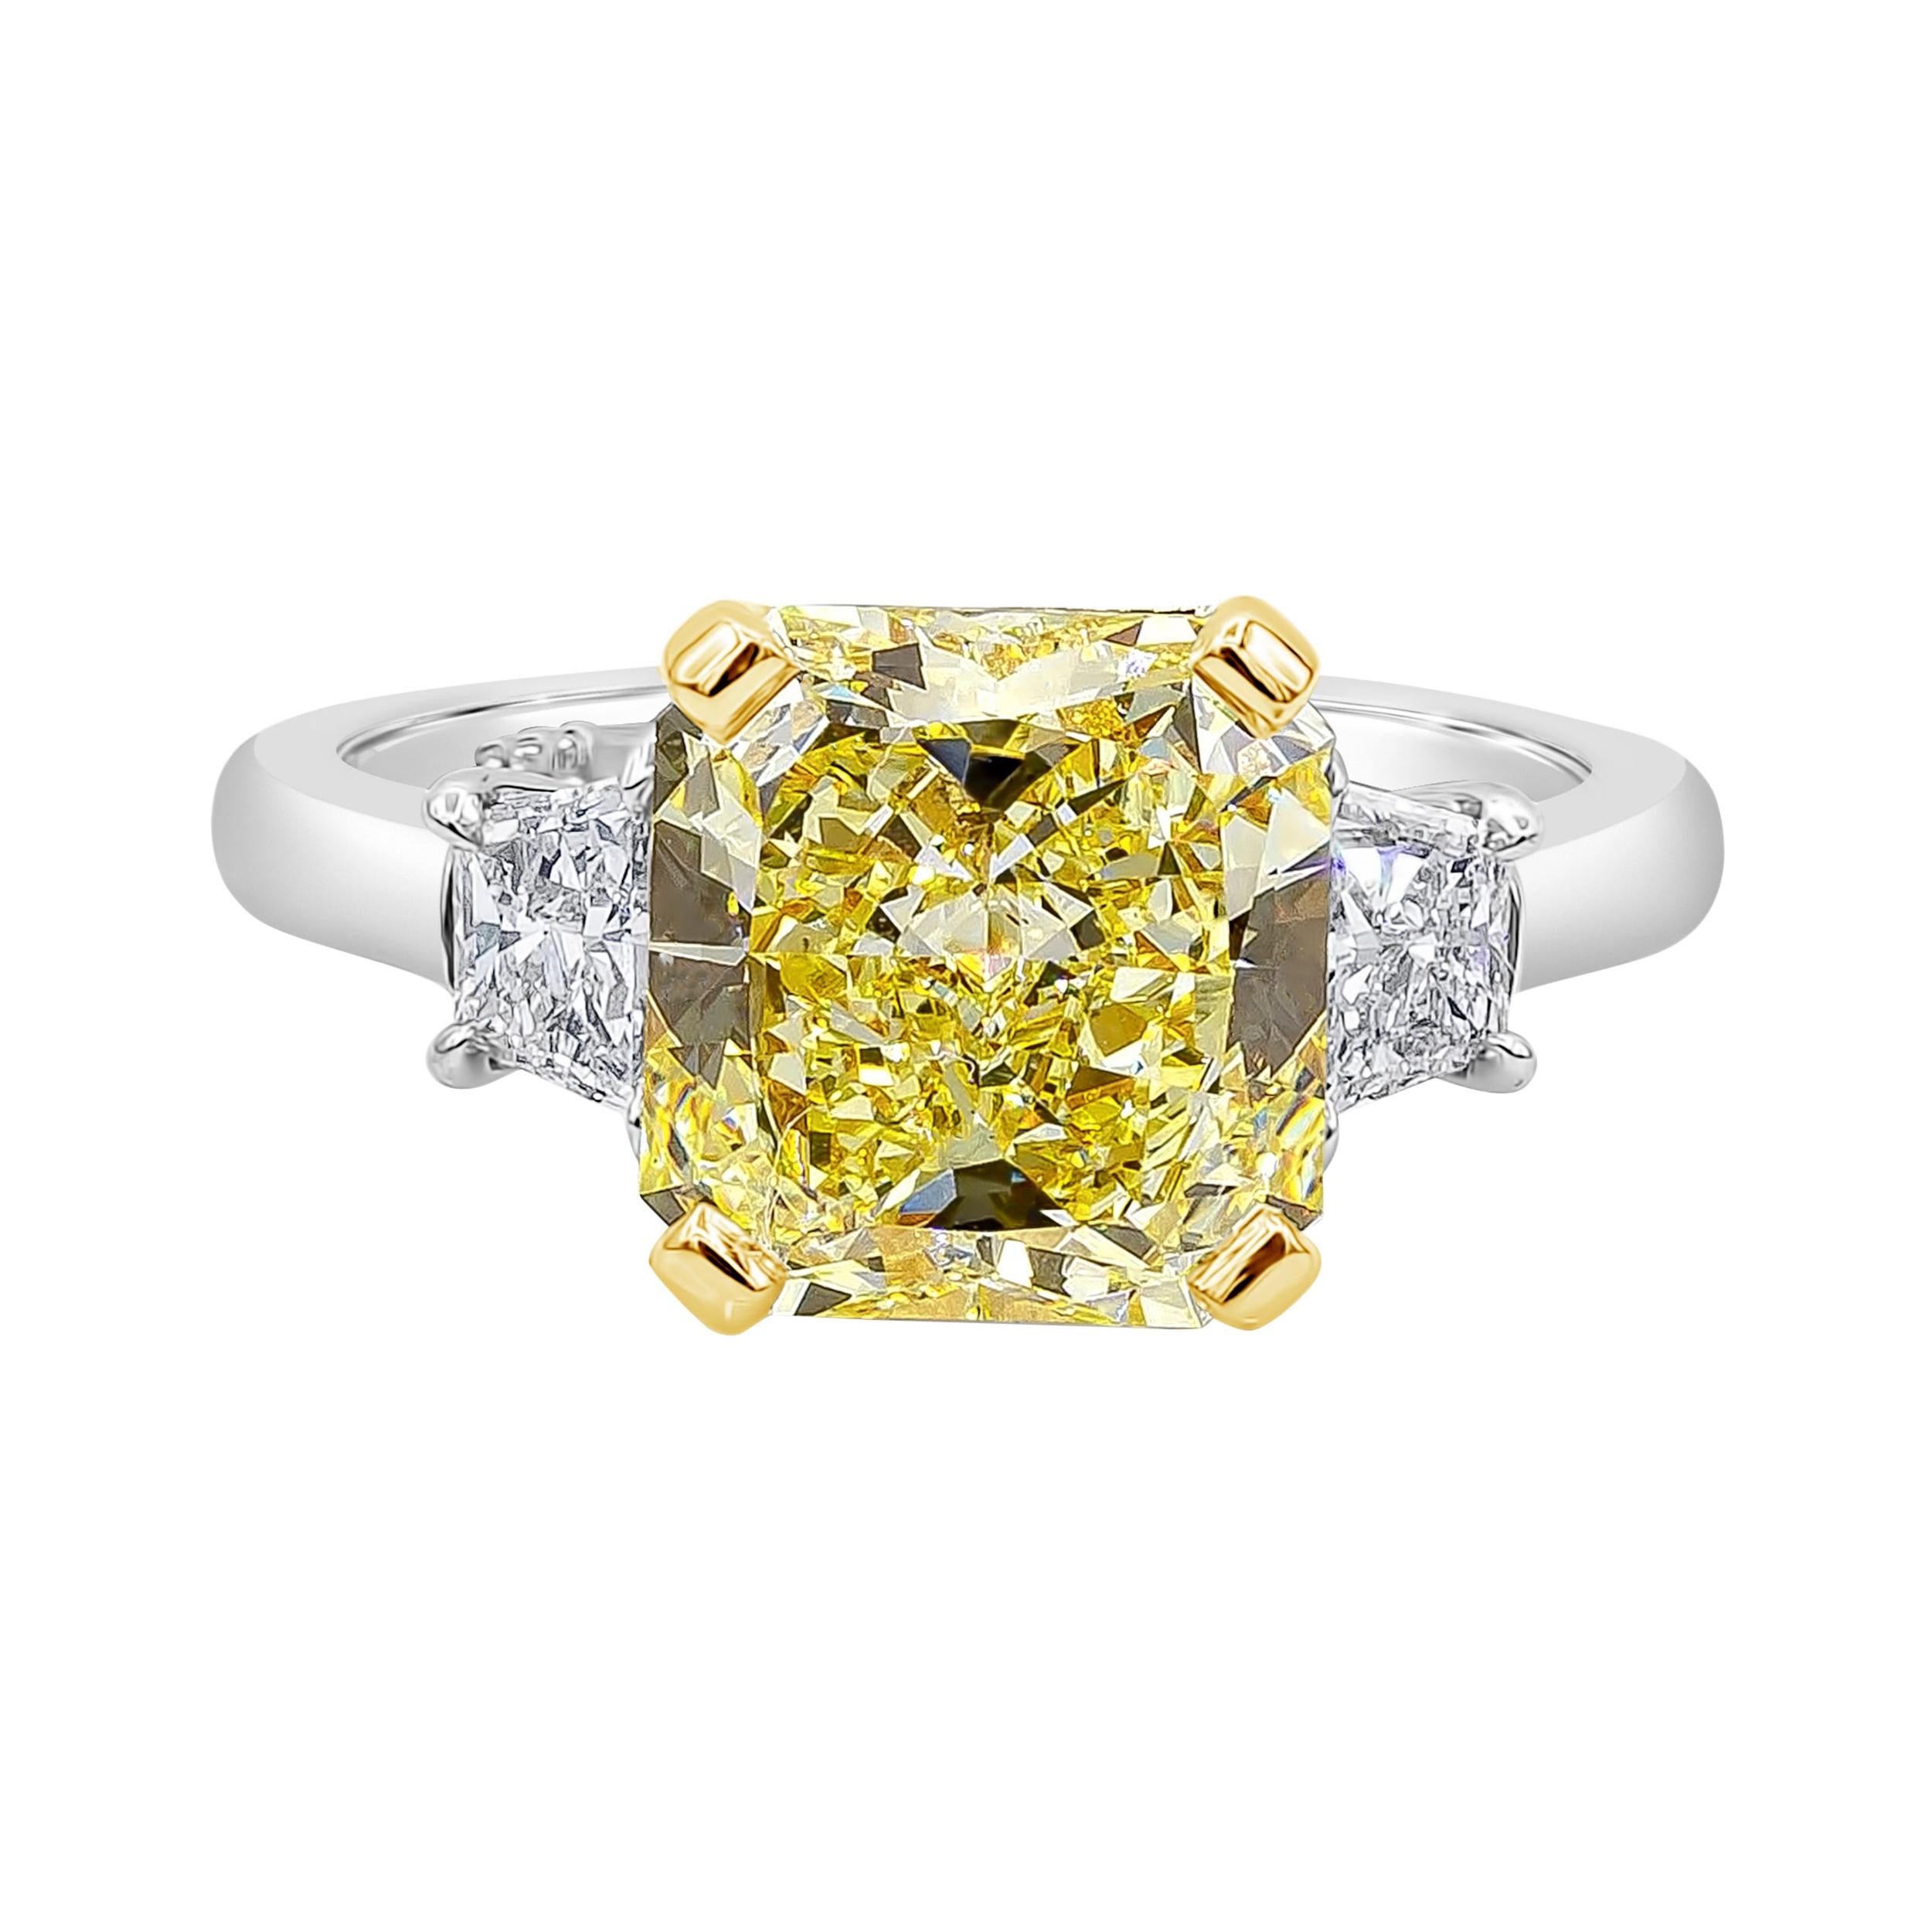 GIA Certified 3.64 Carats Radiant Cut Intense Yellow Diamond Engagement Ring